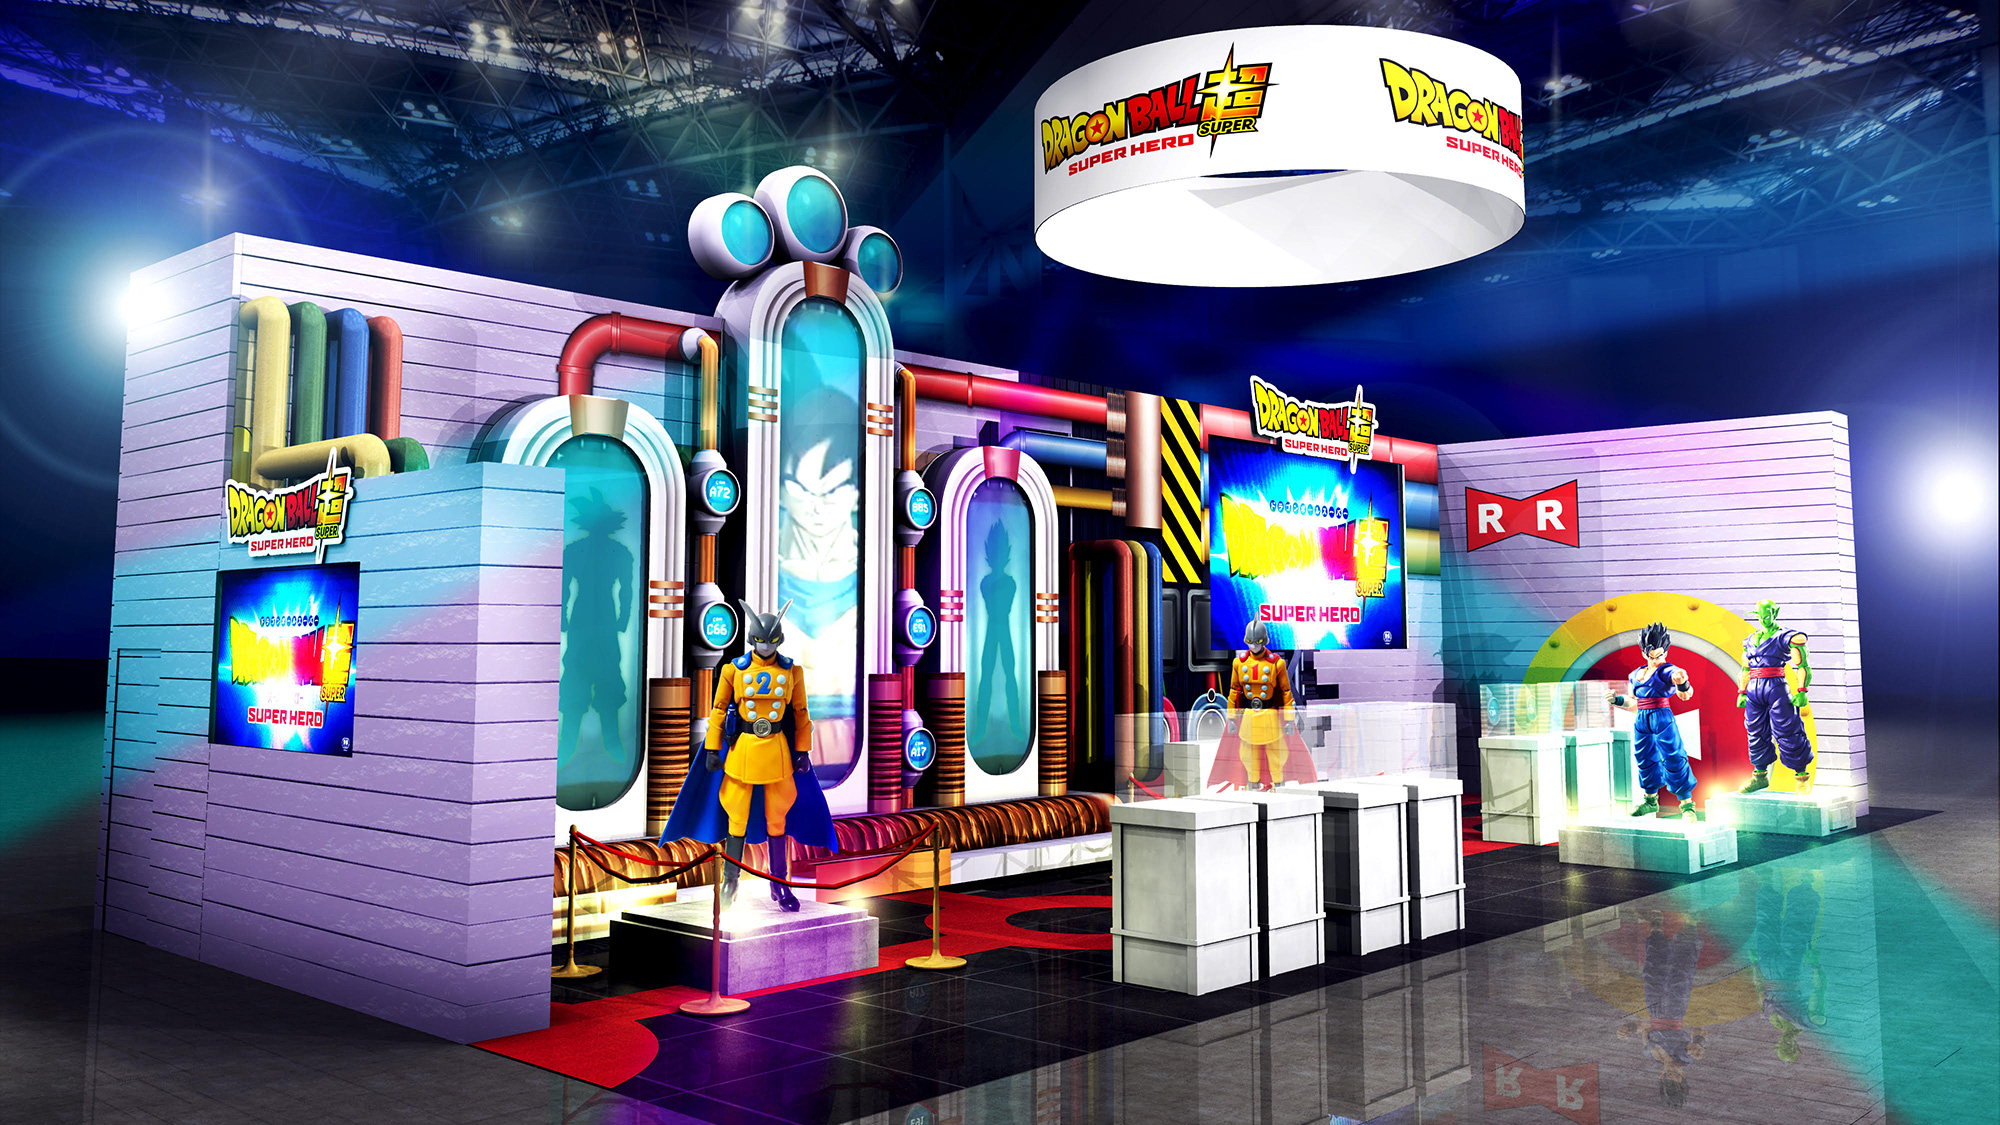  Dragon Ball Super: SUPER HERO Booth